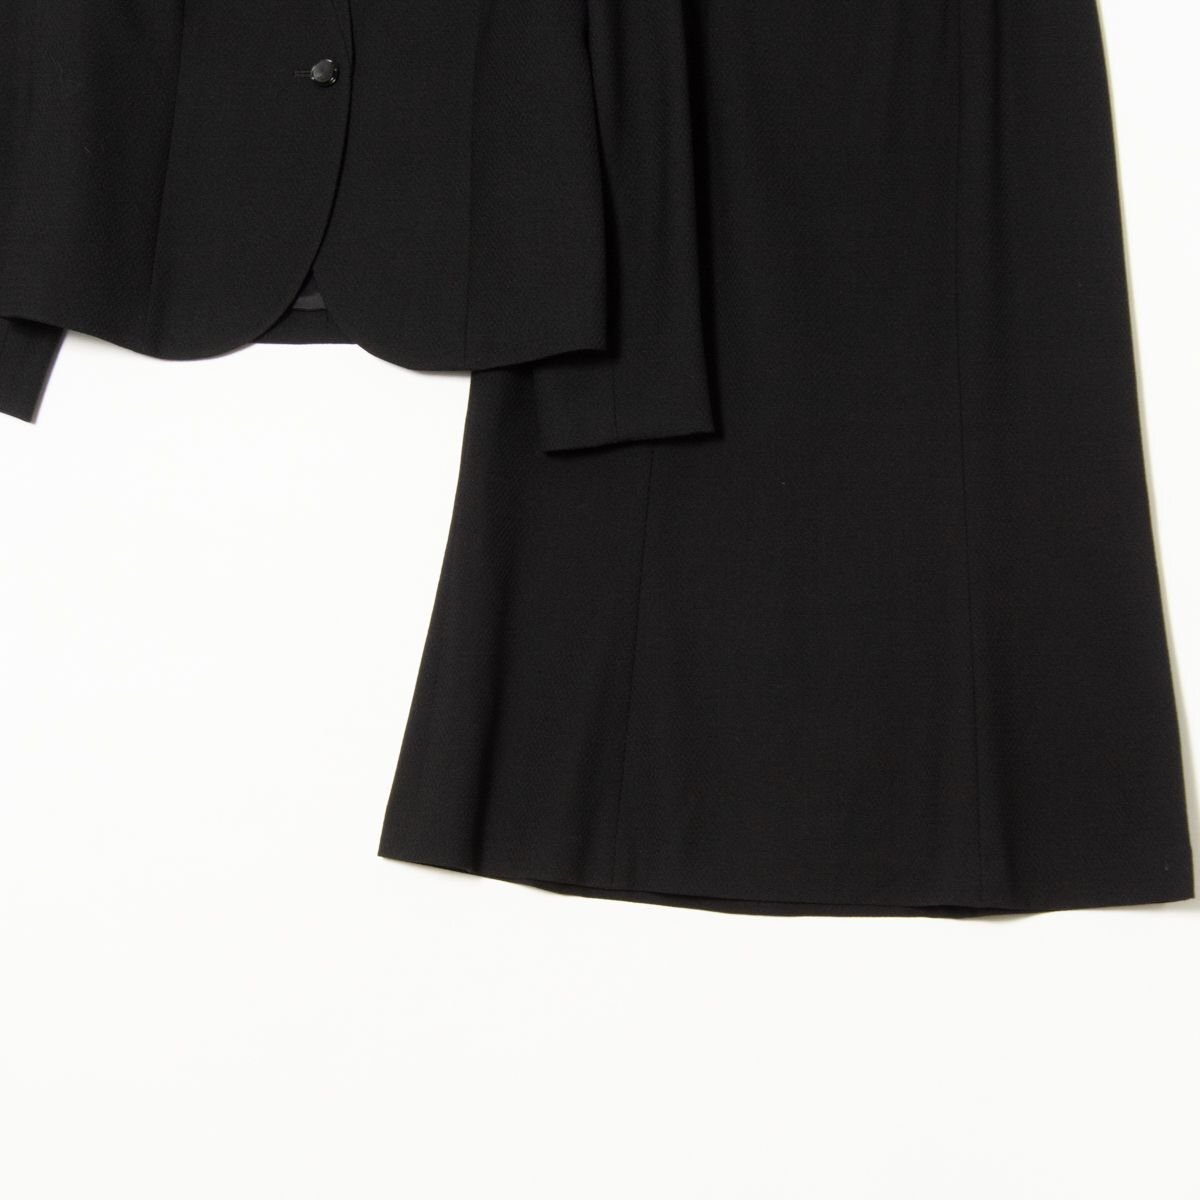 [1 jpy start ]Chloe FORMAL Chloe black formal setup jacket mi leak height skirt wool 100% mourning dress . clothes black 13AR